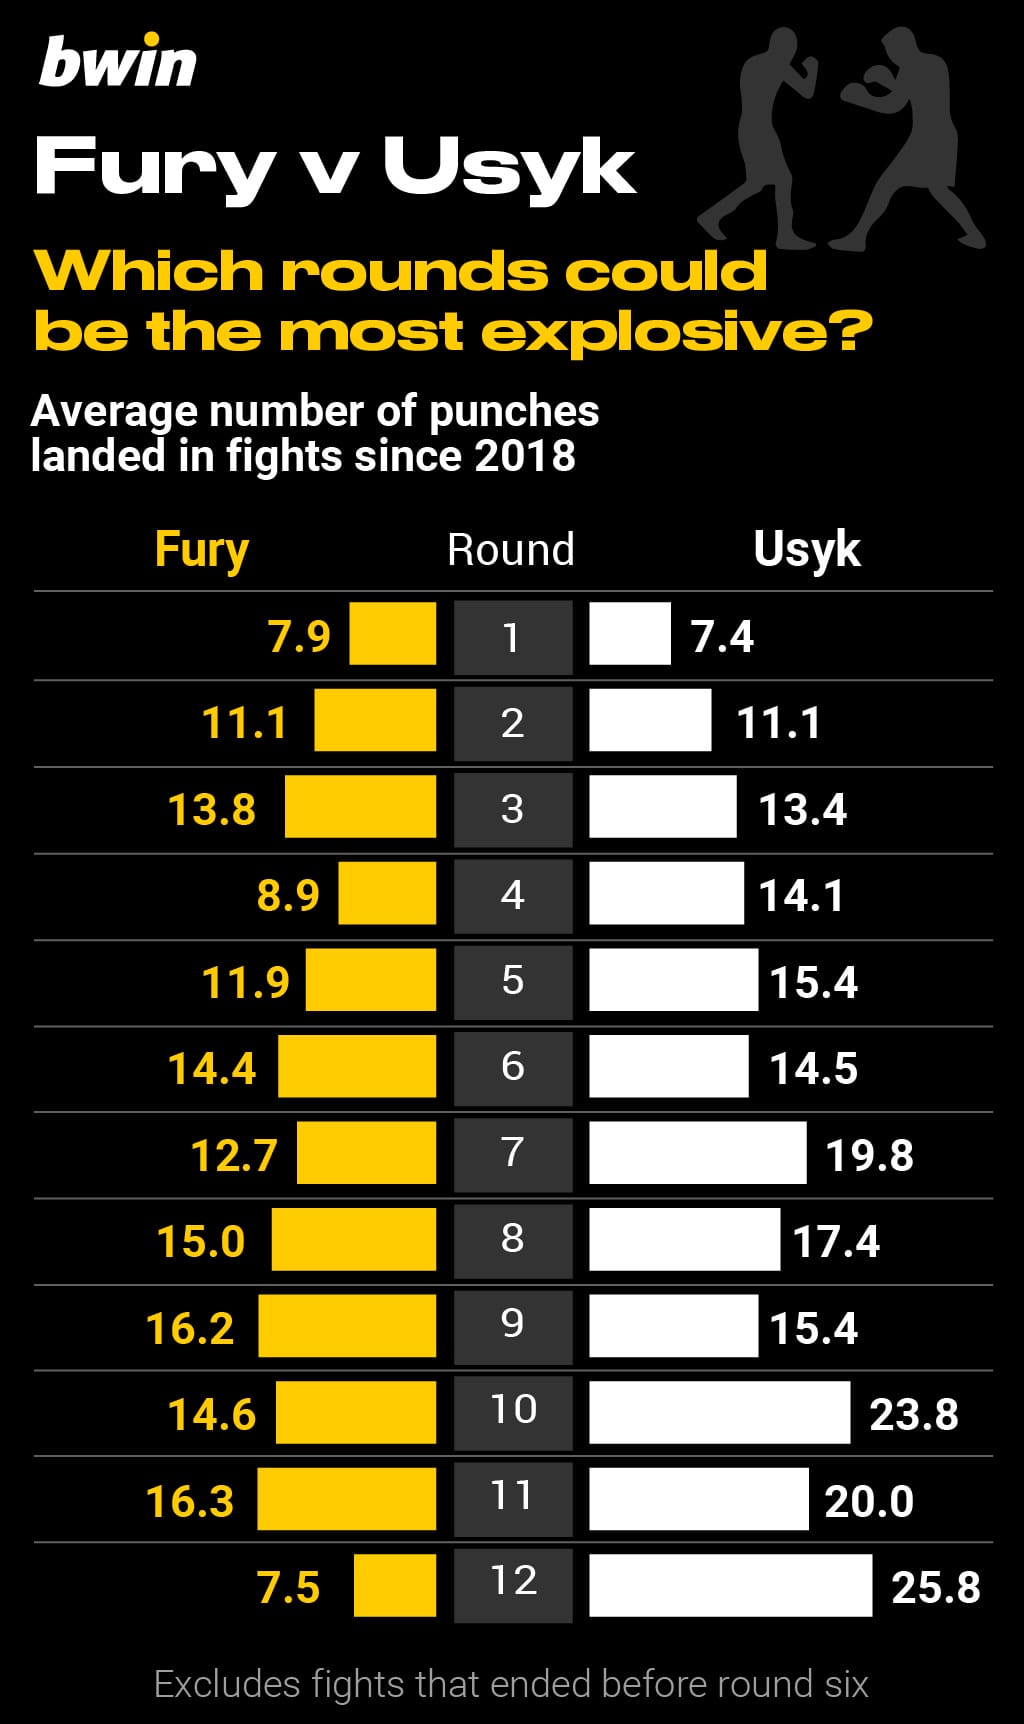 Tyson Fury vs Oleksandr Usyk, boxing